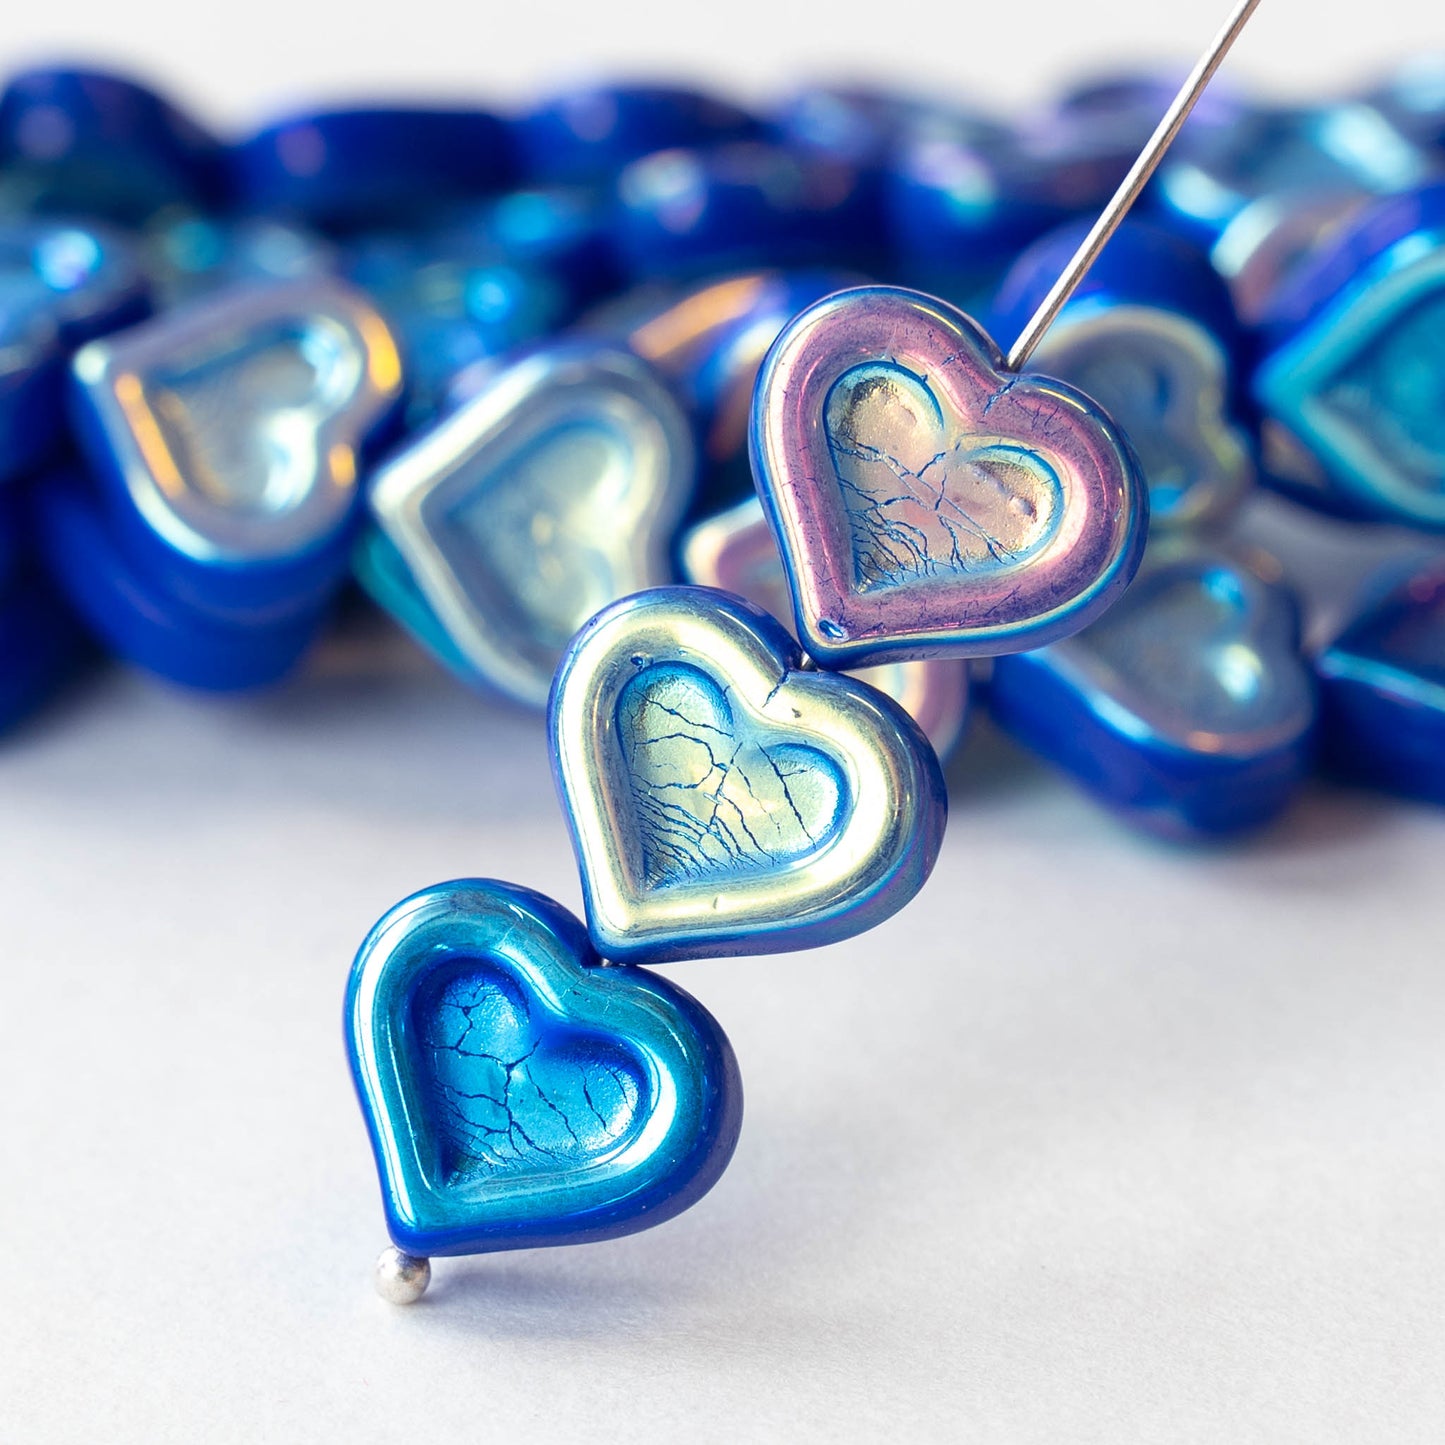 14mm Heart Beads - Opaque Blue Iridescent AB - 10 hearts